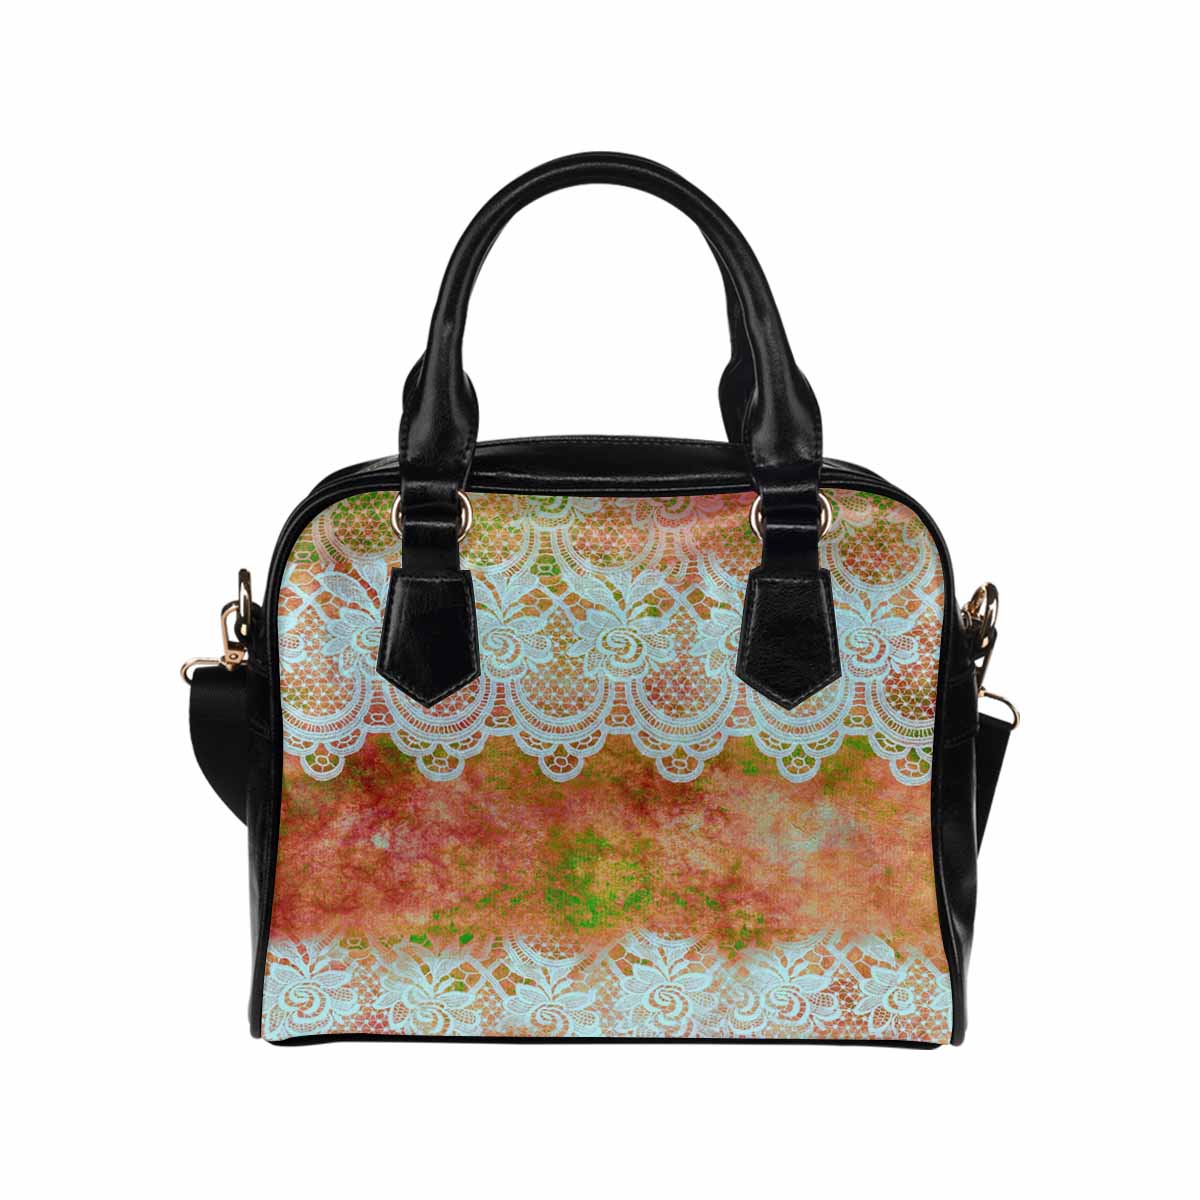 Victorian lace print, cute handbag, Mod 19163453, design 31